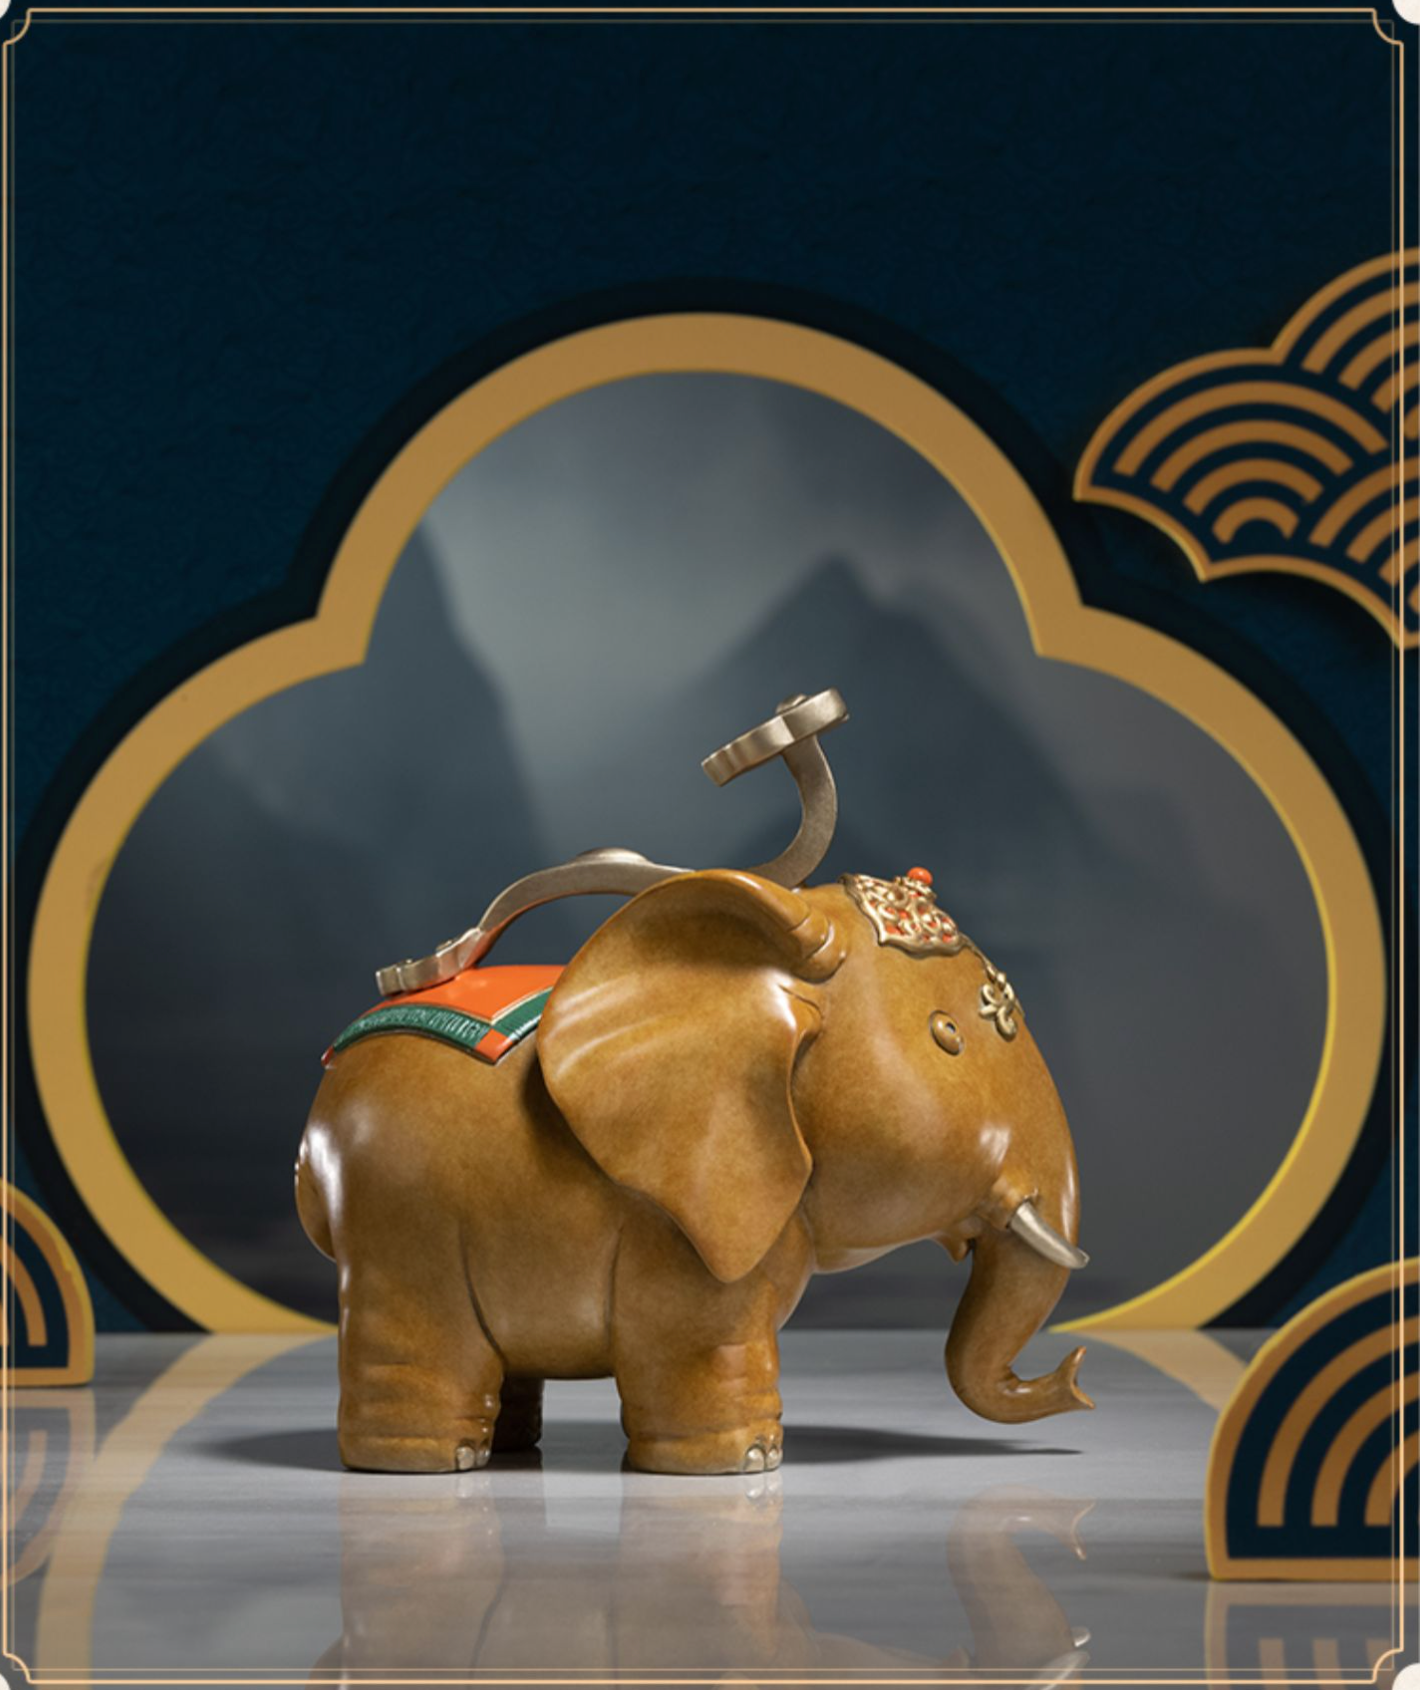 Pure Brass Elephant Carrying A Ruyi - Morrow Land